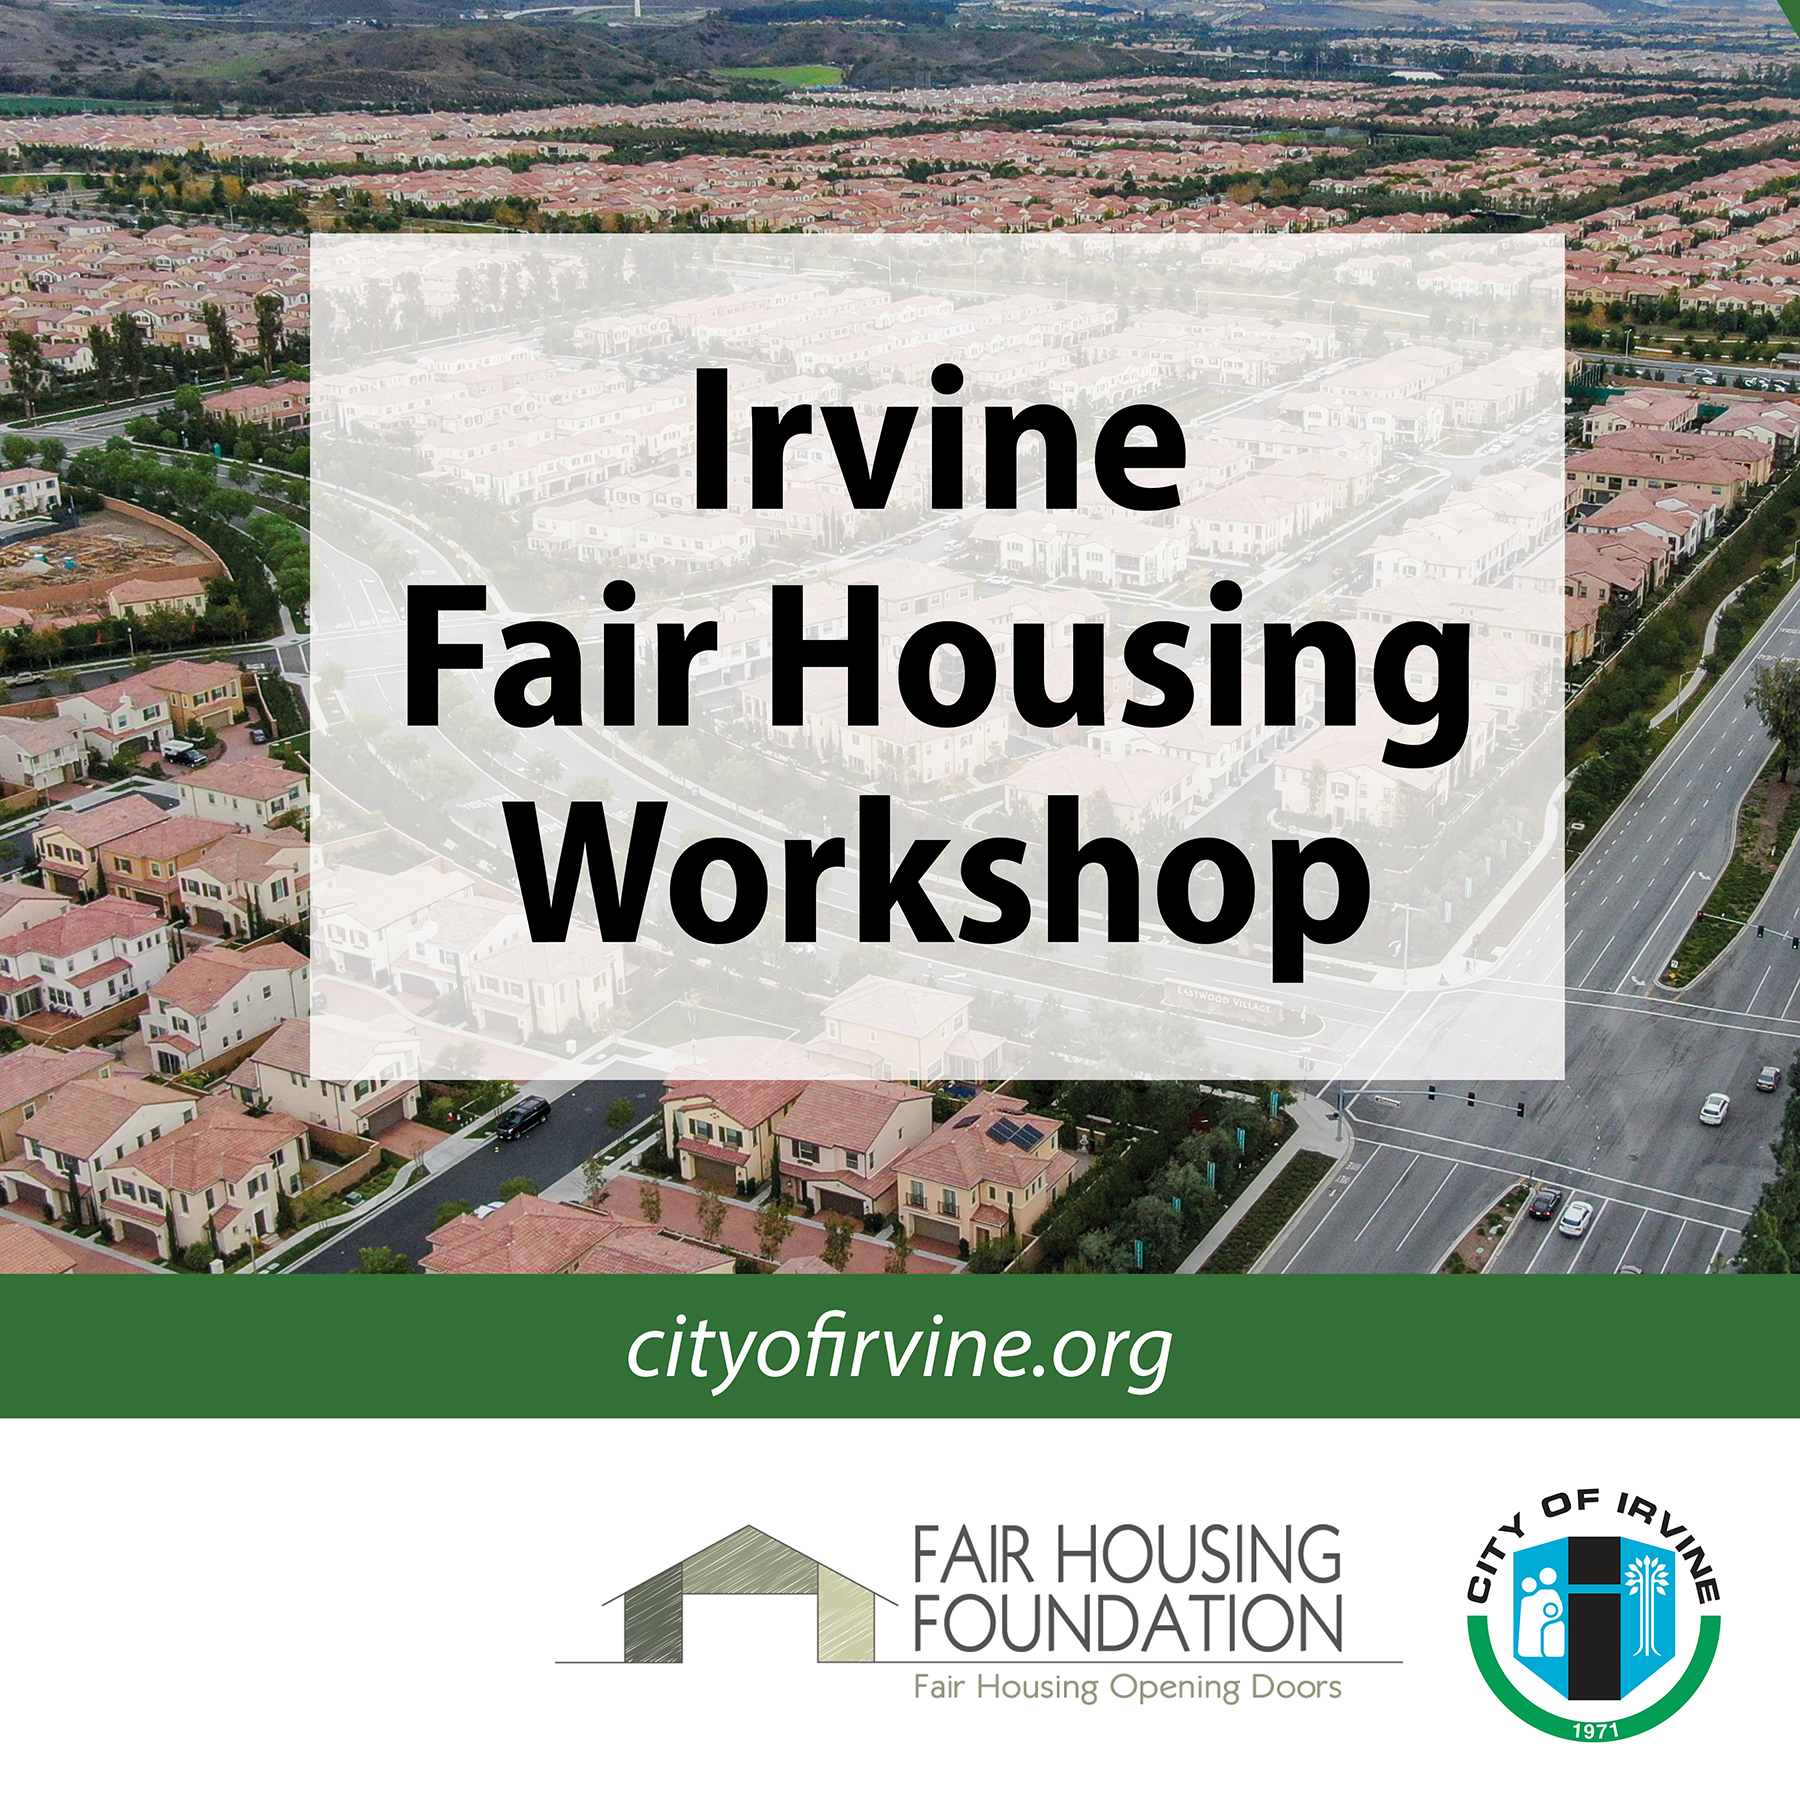 Fair Housing Foundation Workshop